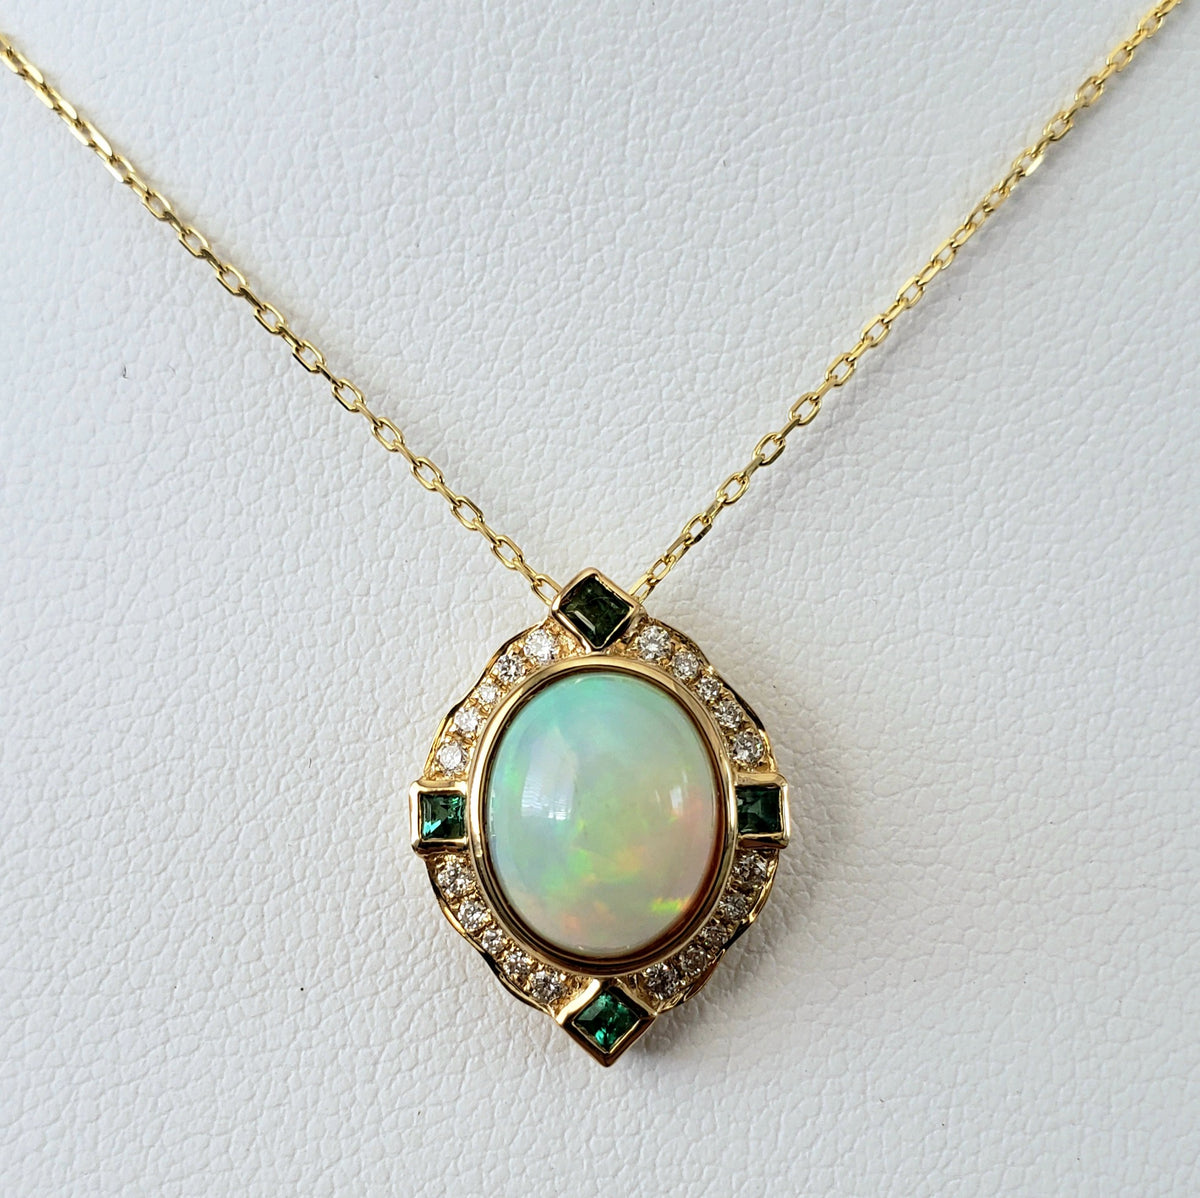 Vintage opal pendant - Monte Cristo